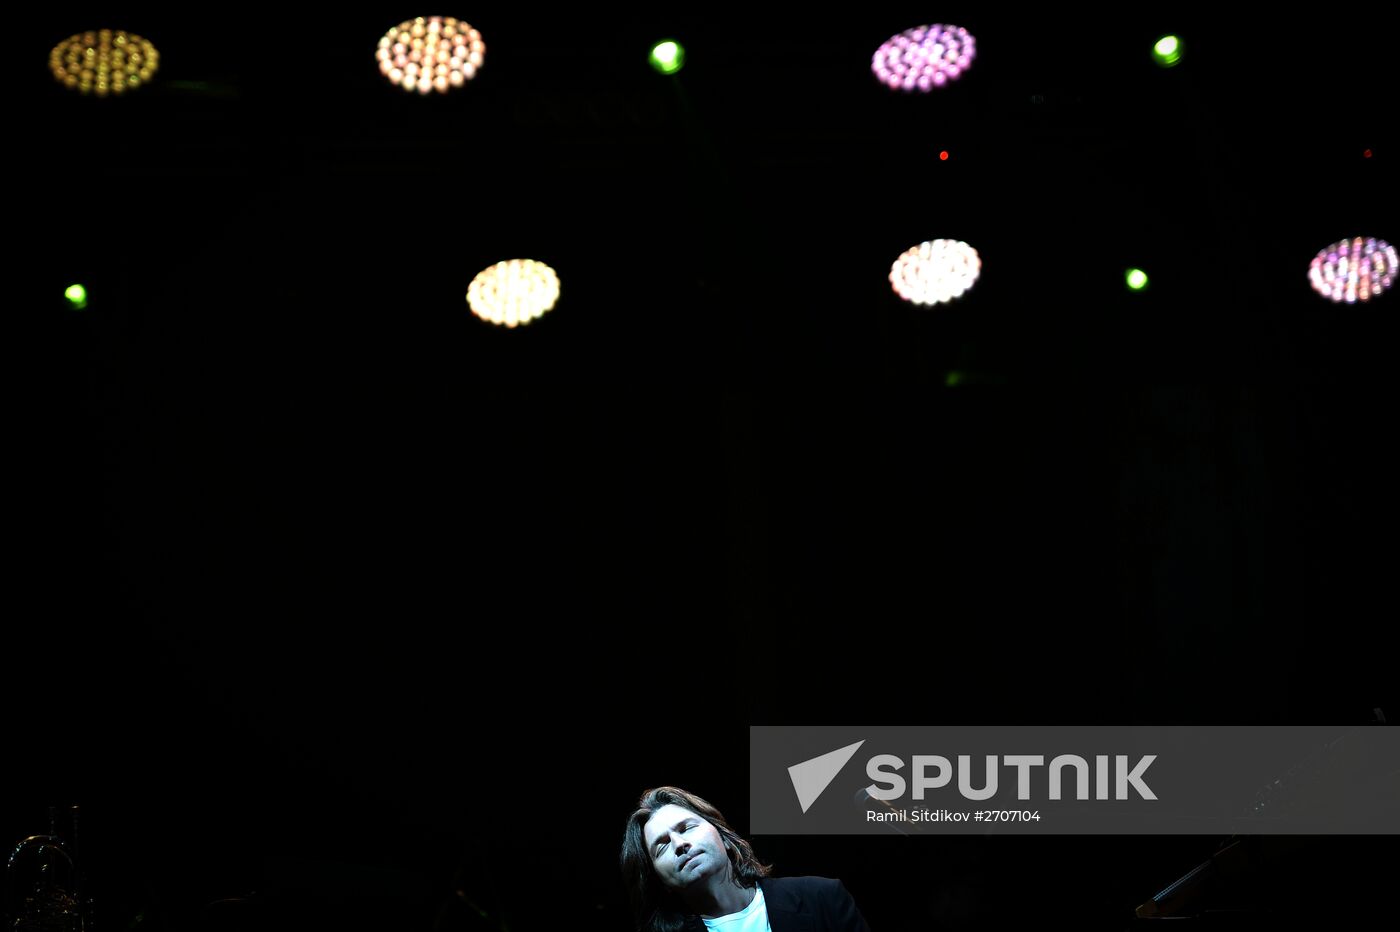 Dmitry Malikov's concert at Fifth Circle of Light International Festival